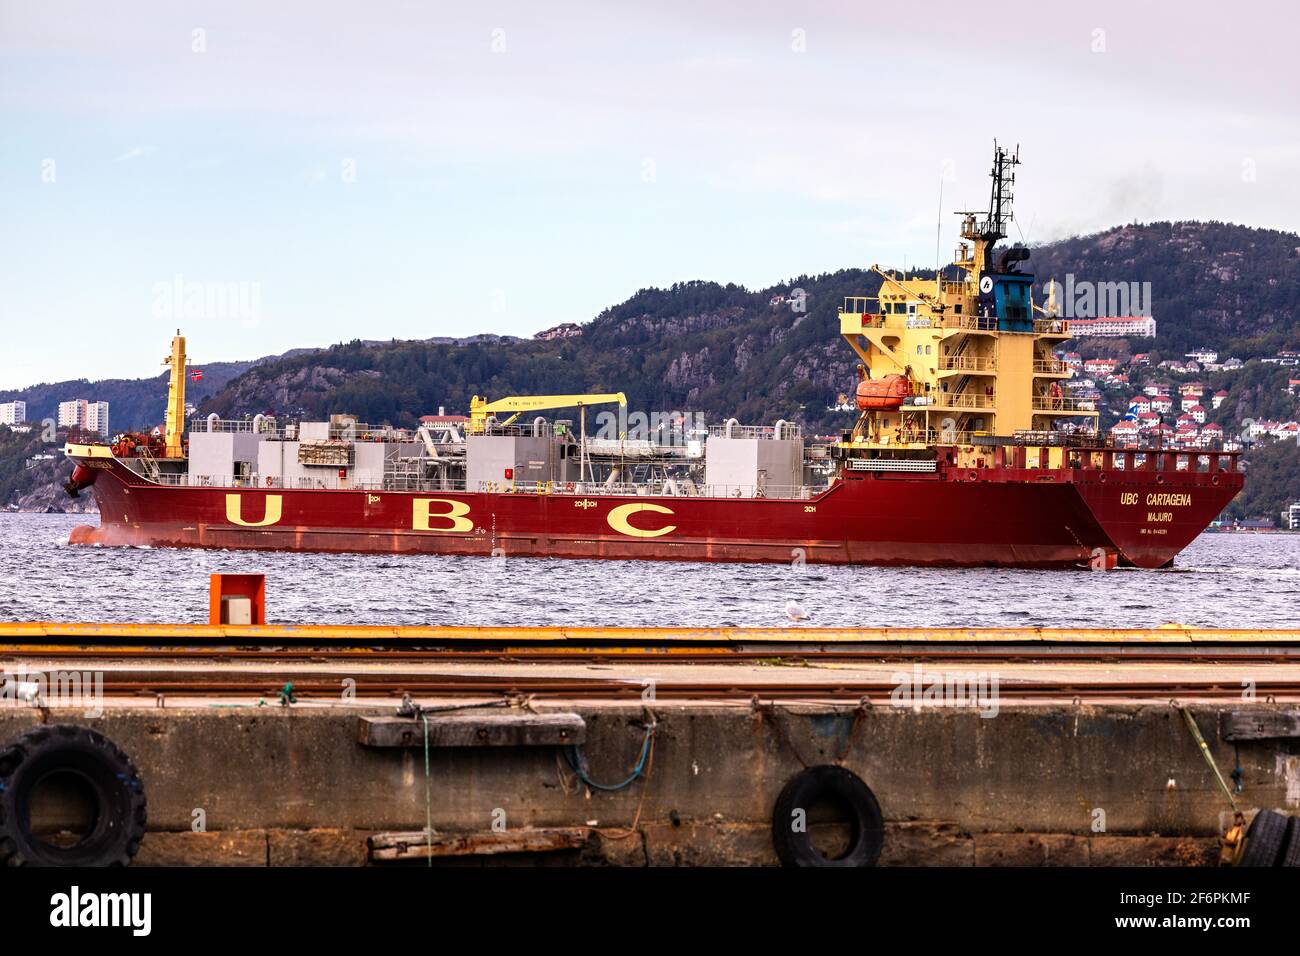 Pneumatic cement carrier UBC Cartagena in Puddefjorden, departing fromn the port of Bergen, Norway. Stock Photo